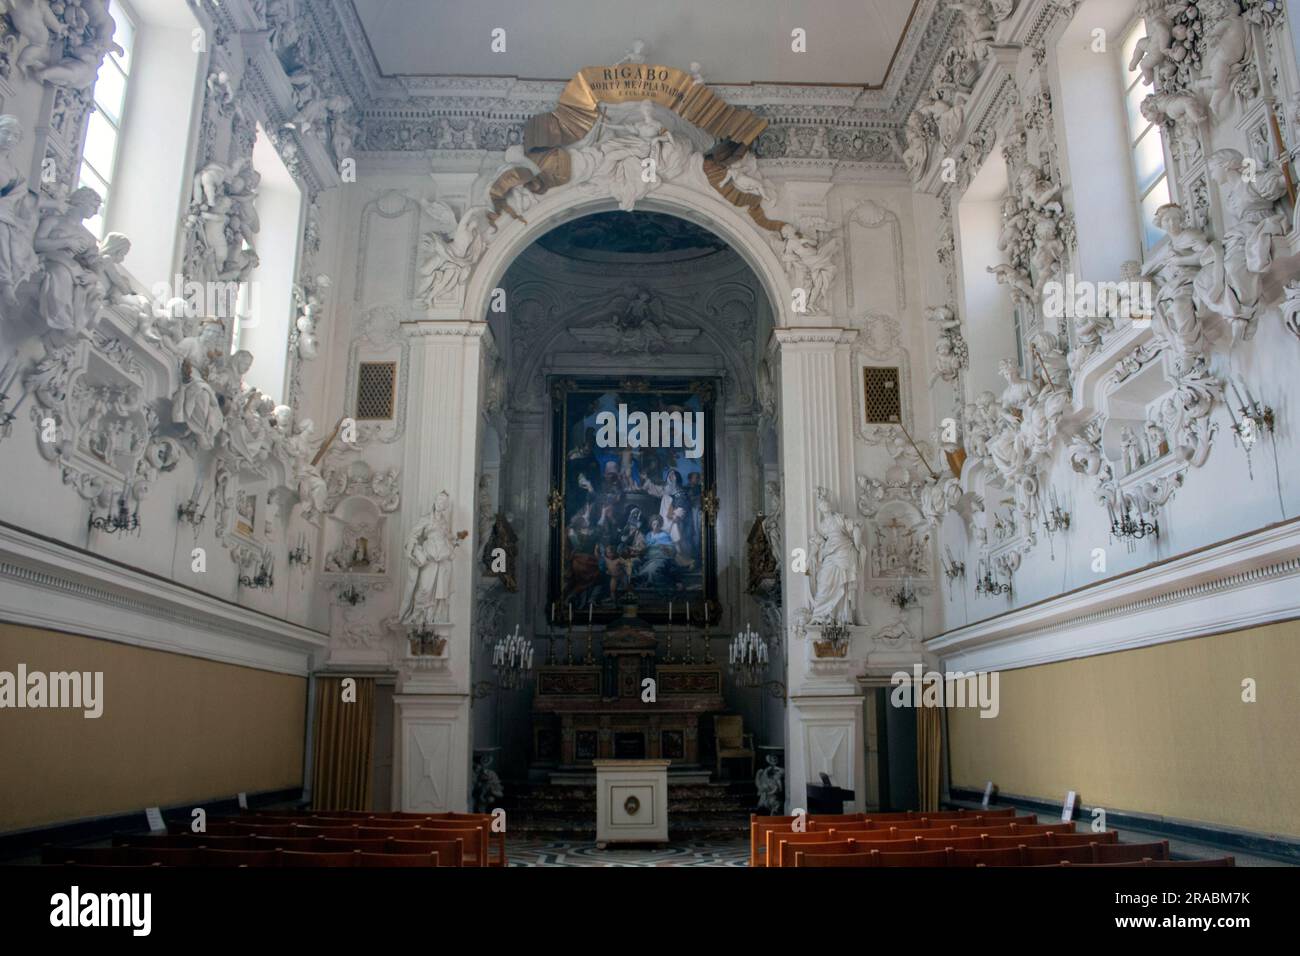 L'intérieur baroque en stuc de l'Oratorio del Rosario di Santa Cita - Oratoire du Rosaire de Santa Cita - Palerme, Sicile Banque D'Images